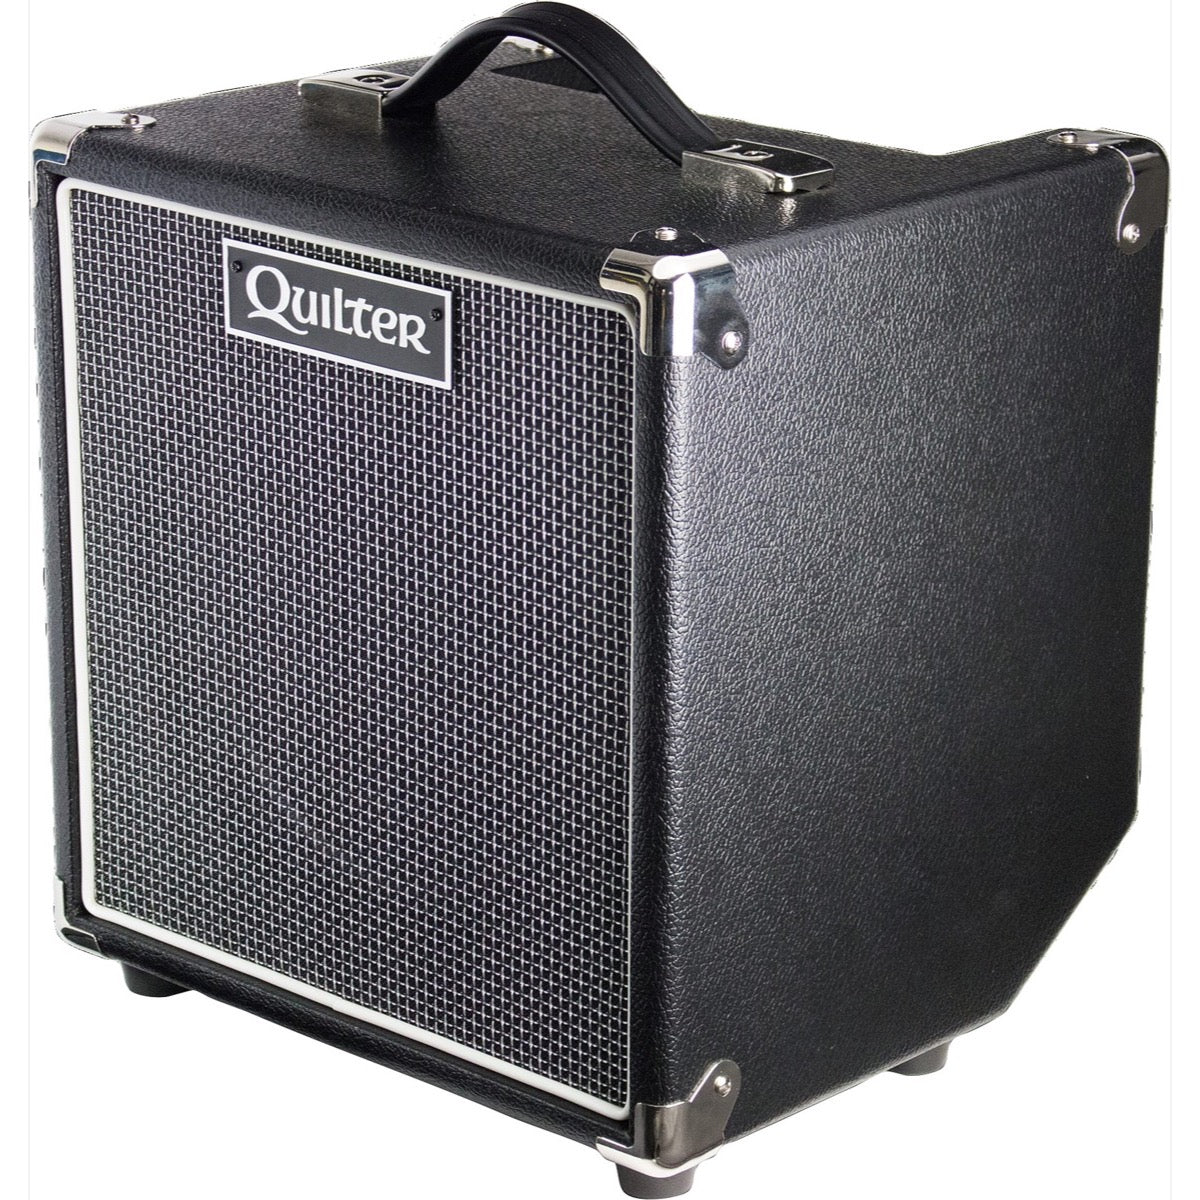 Quilter BlockDock 10TC Guitar Speaker Cabinet (100 Watts, 1x10 Inch), 8 Ohms